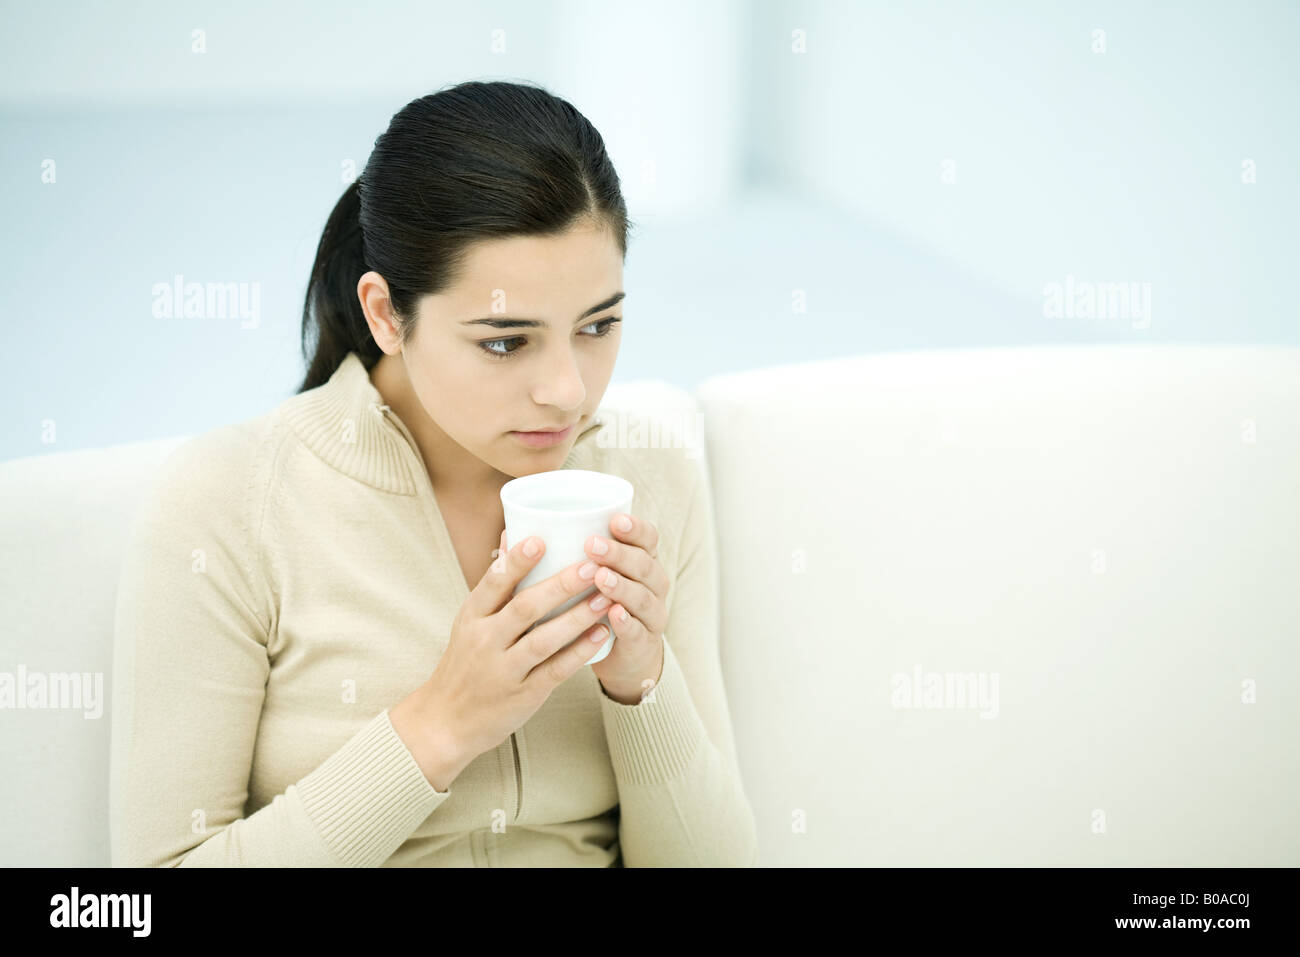 Young woman sitting, holding coffee mug, looking away Stock Photo